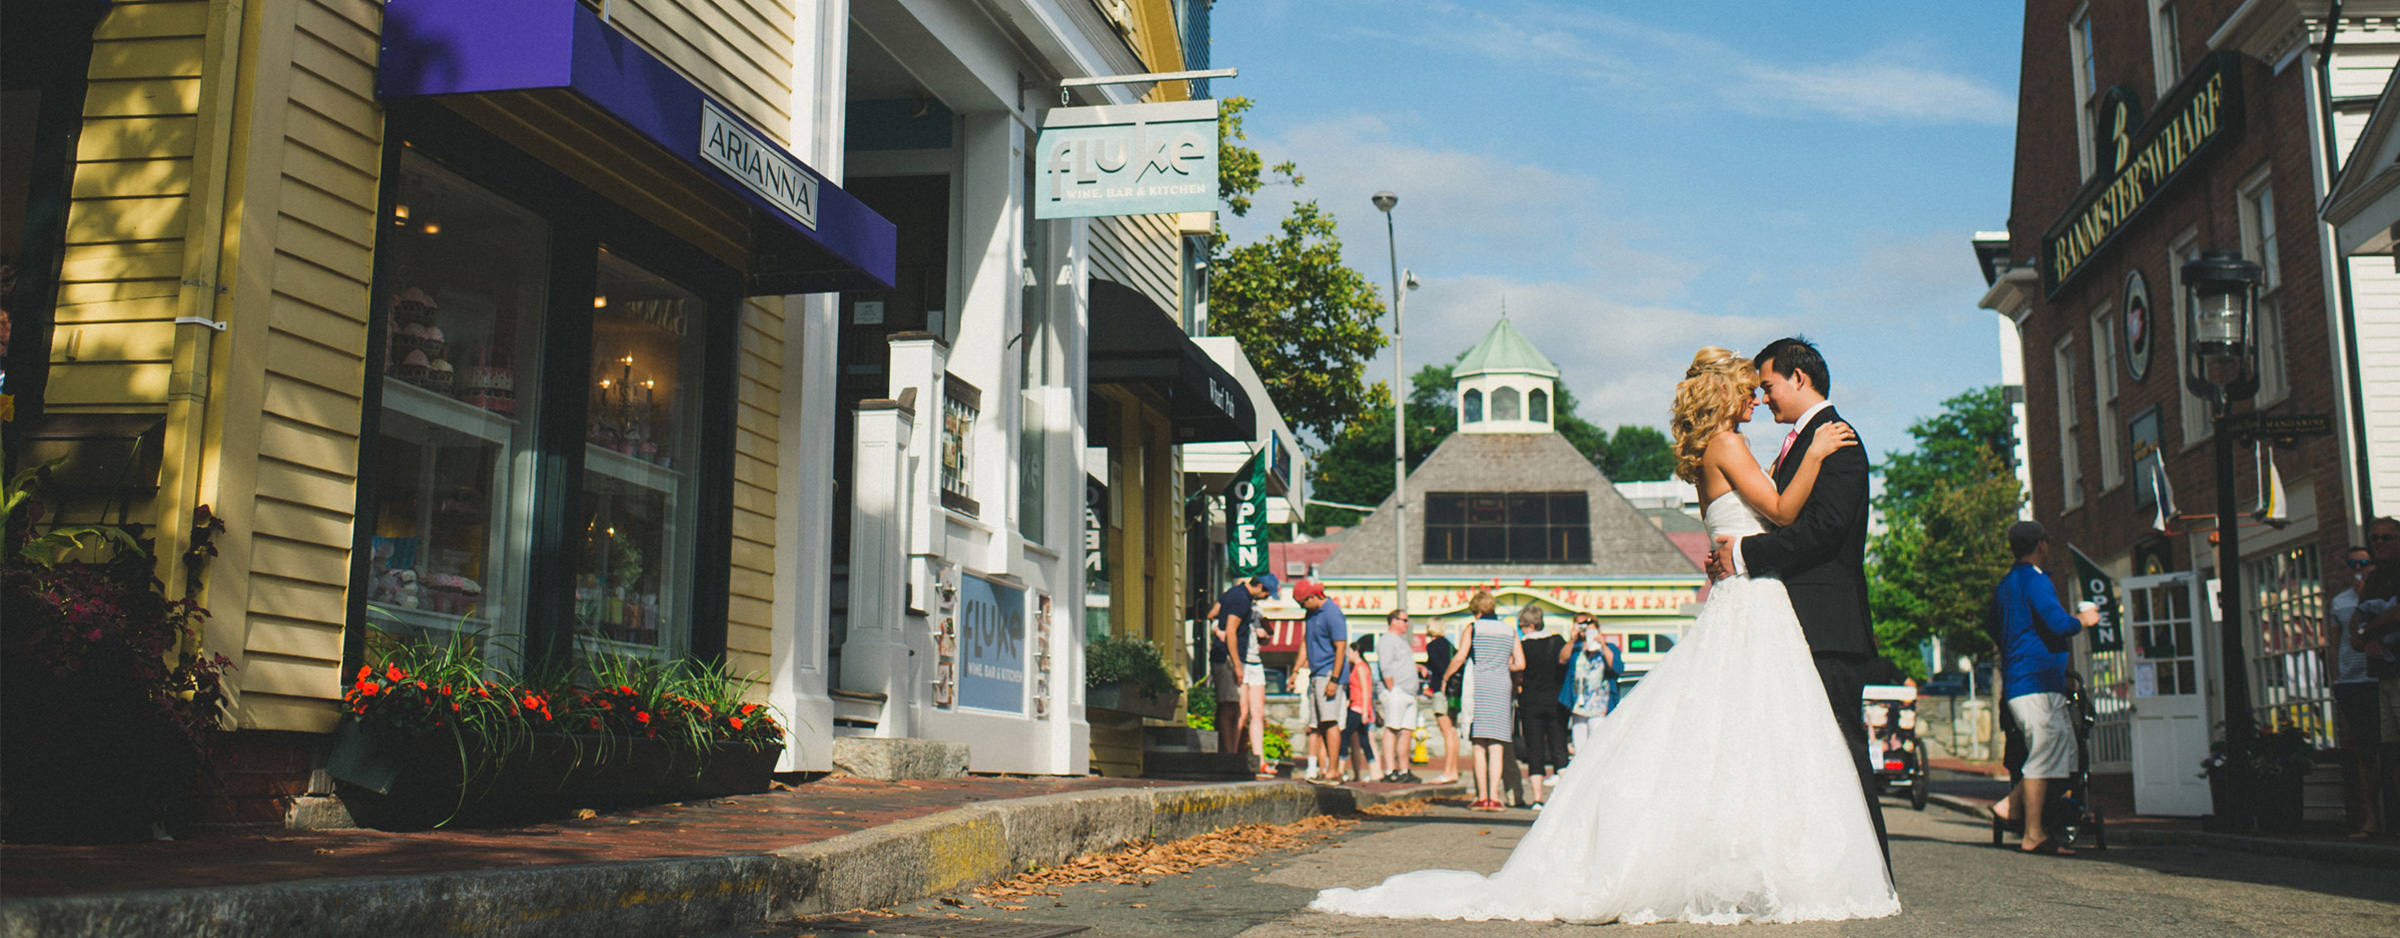 Rotunda-Easton-Beach-Newport-Rhode-Island-Wedding-0001